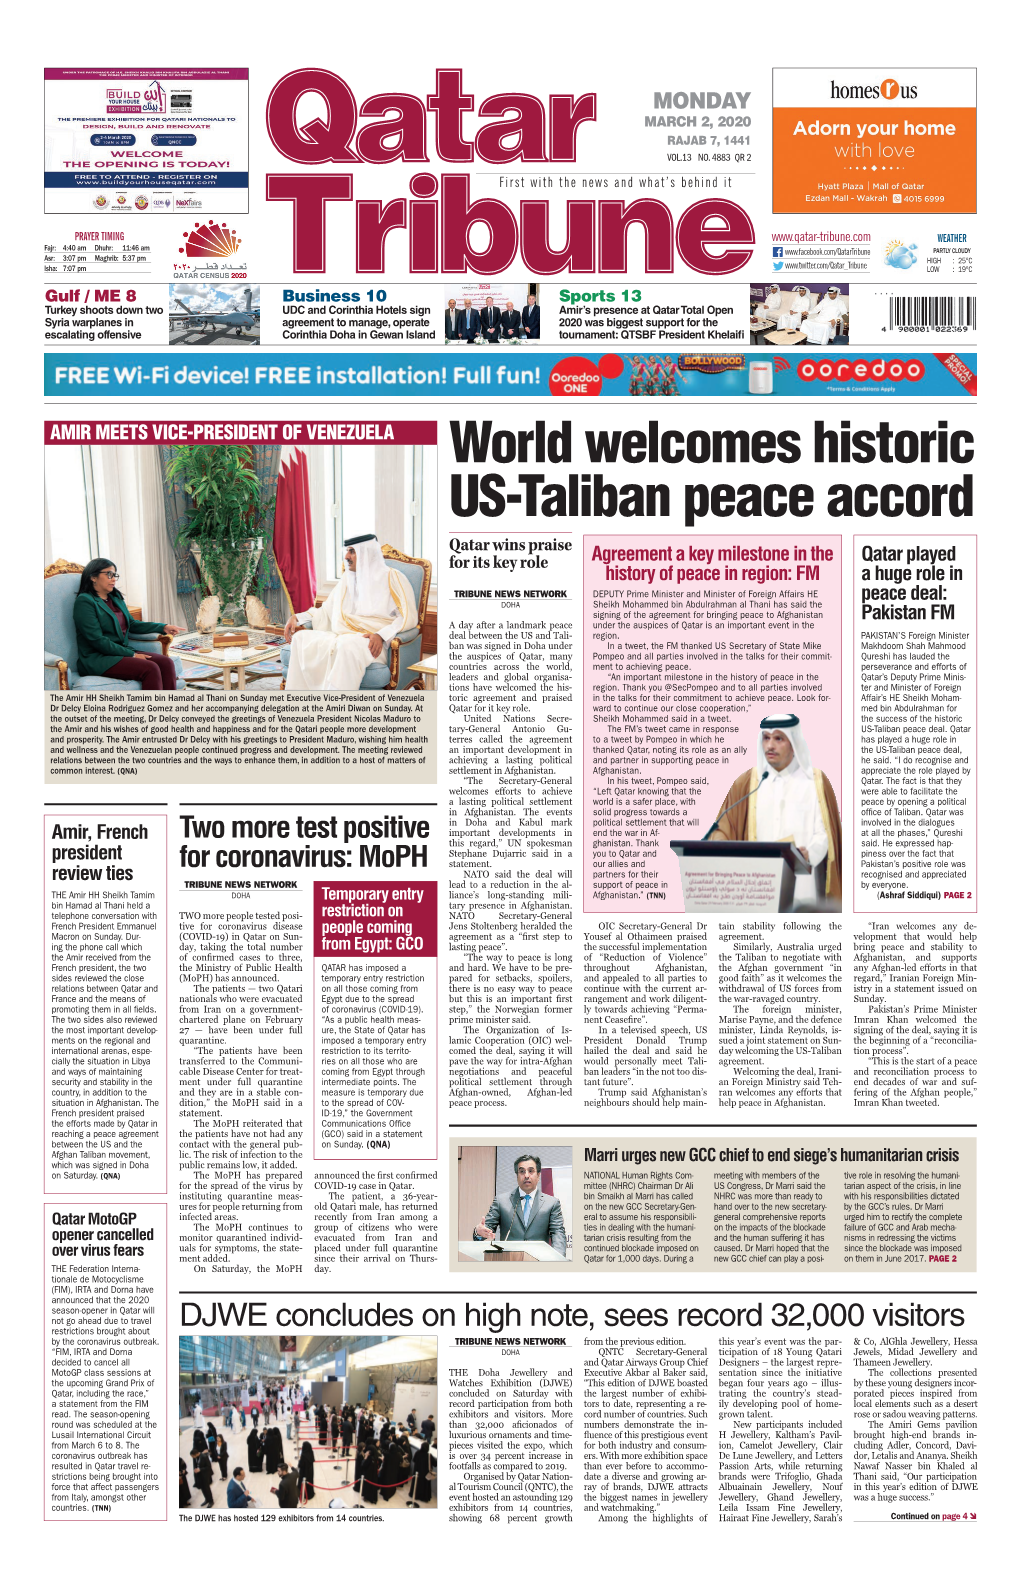 World Welcomes Historic US-Taliban Peace Accord